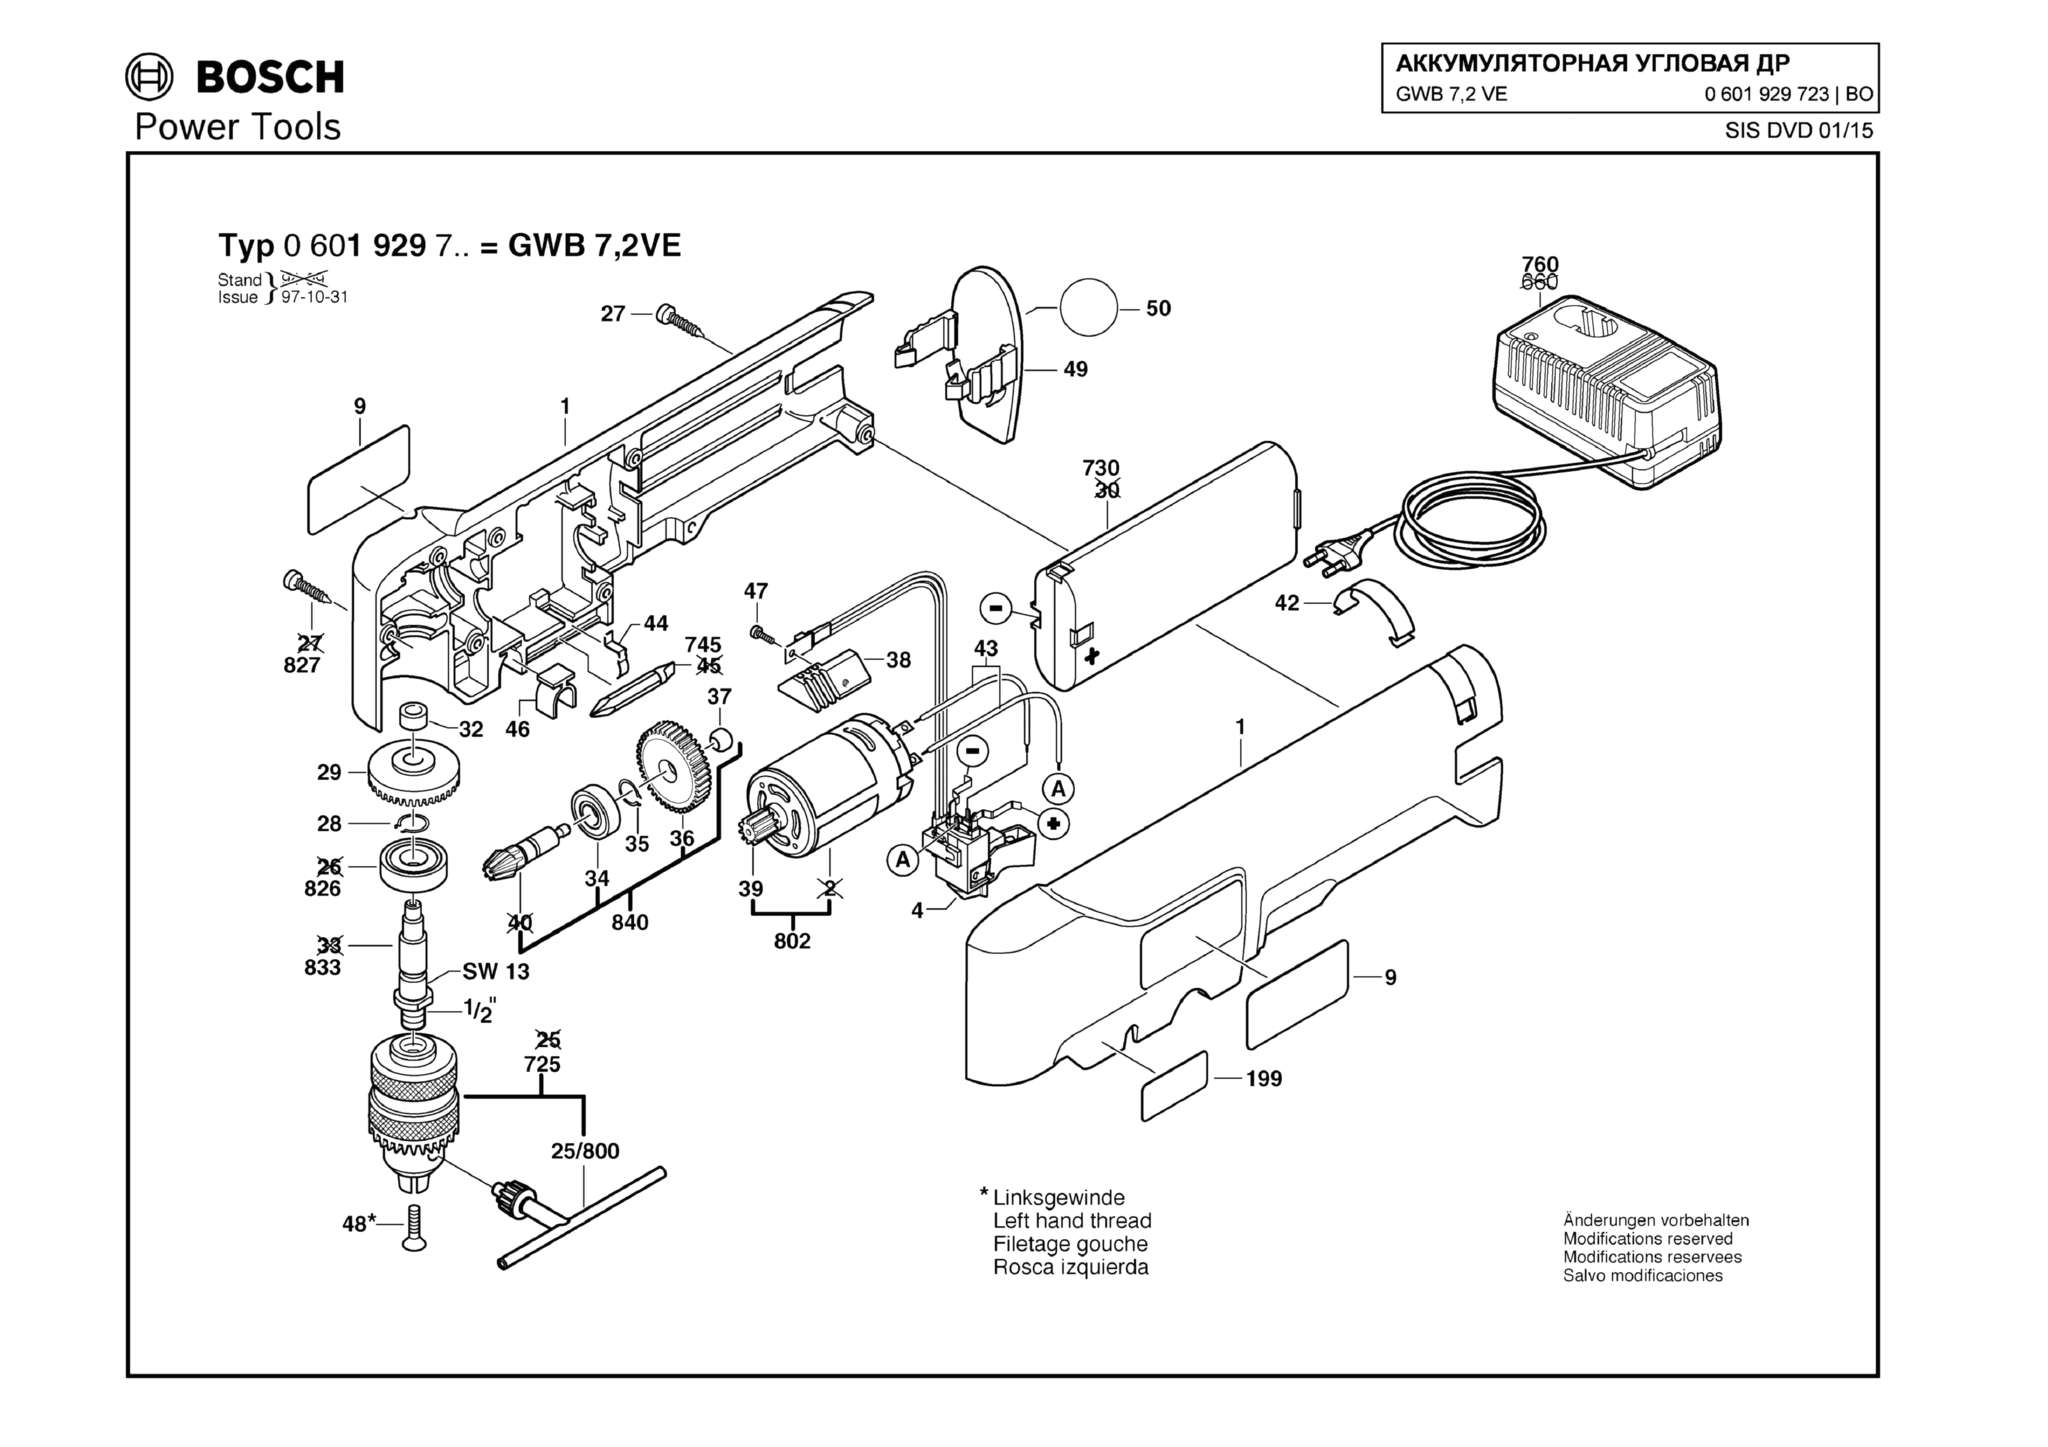 Запчасти, схема и деталировка Bosch GWB 7,2 VE (ТИП 0601929723)